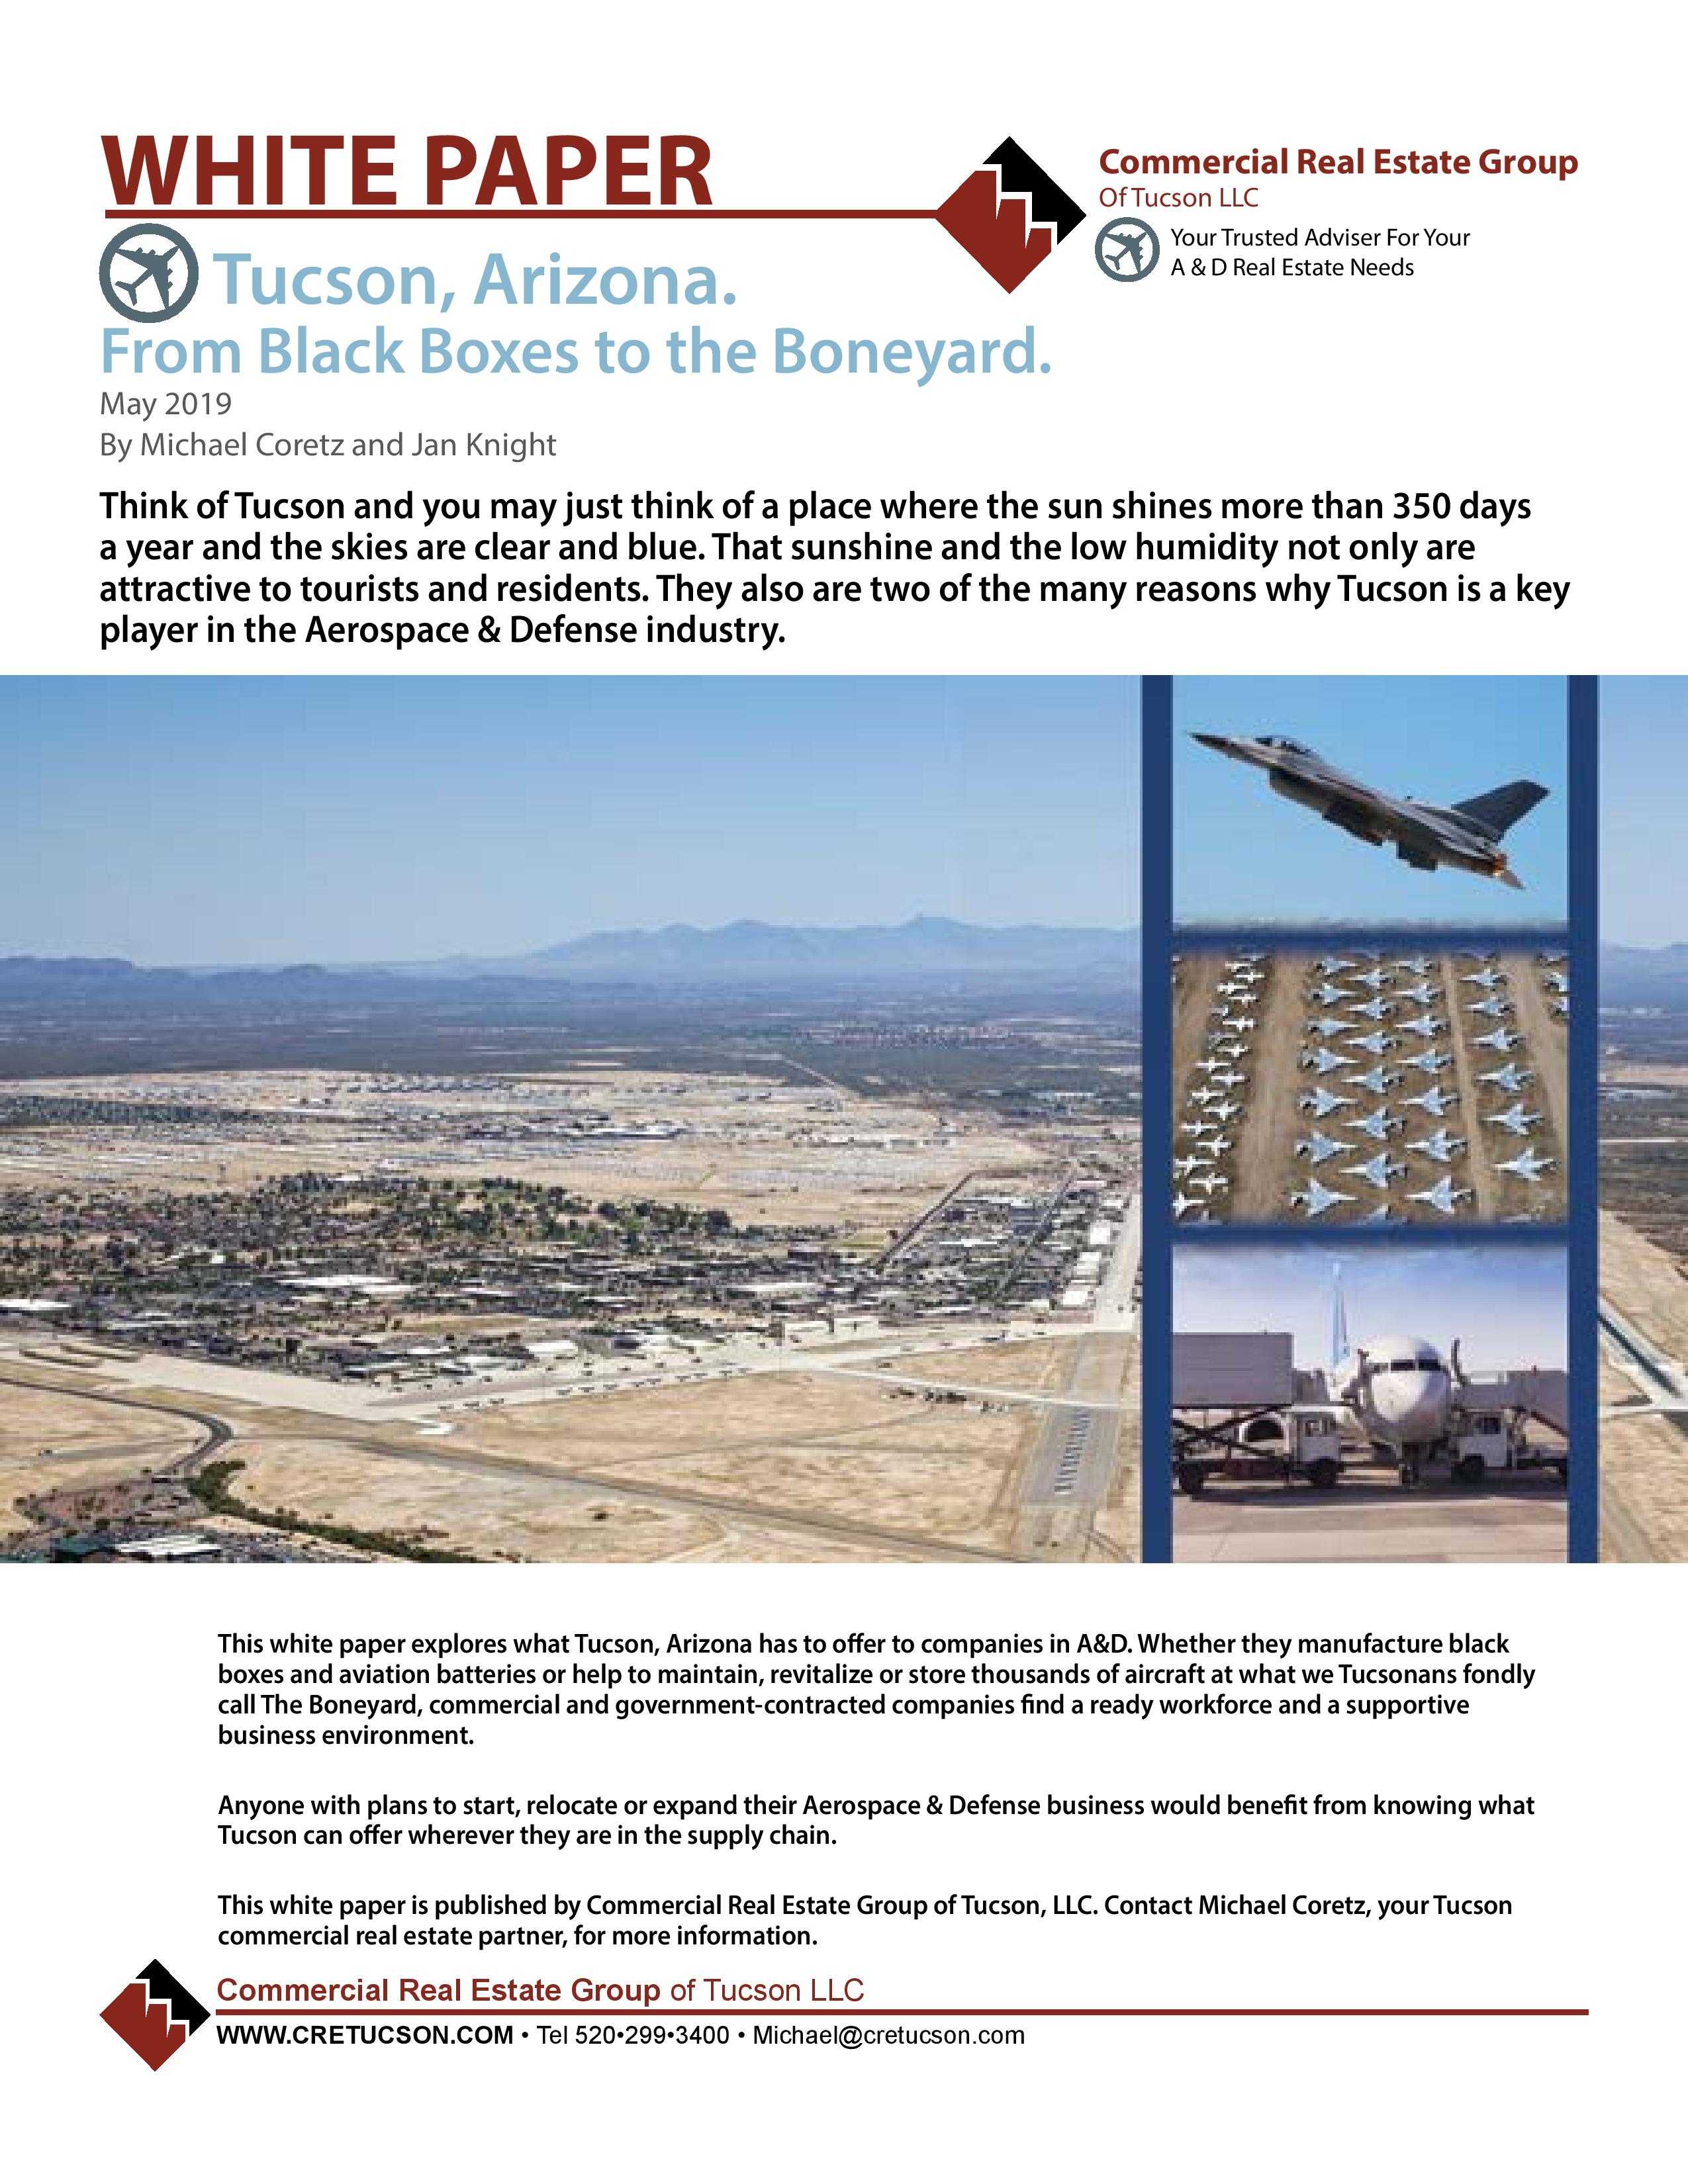 Aerospace & Defense Industry White Paper for Tucson, Arizona